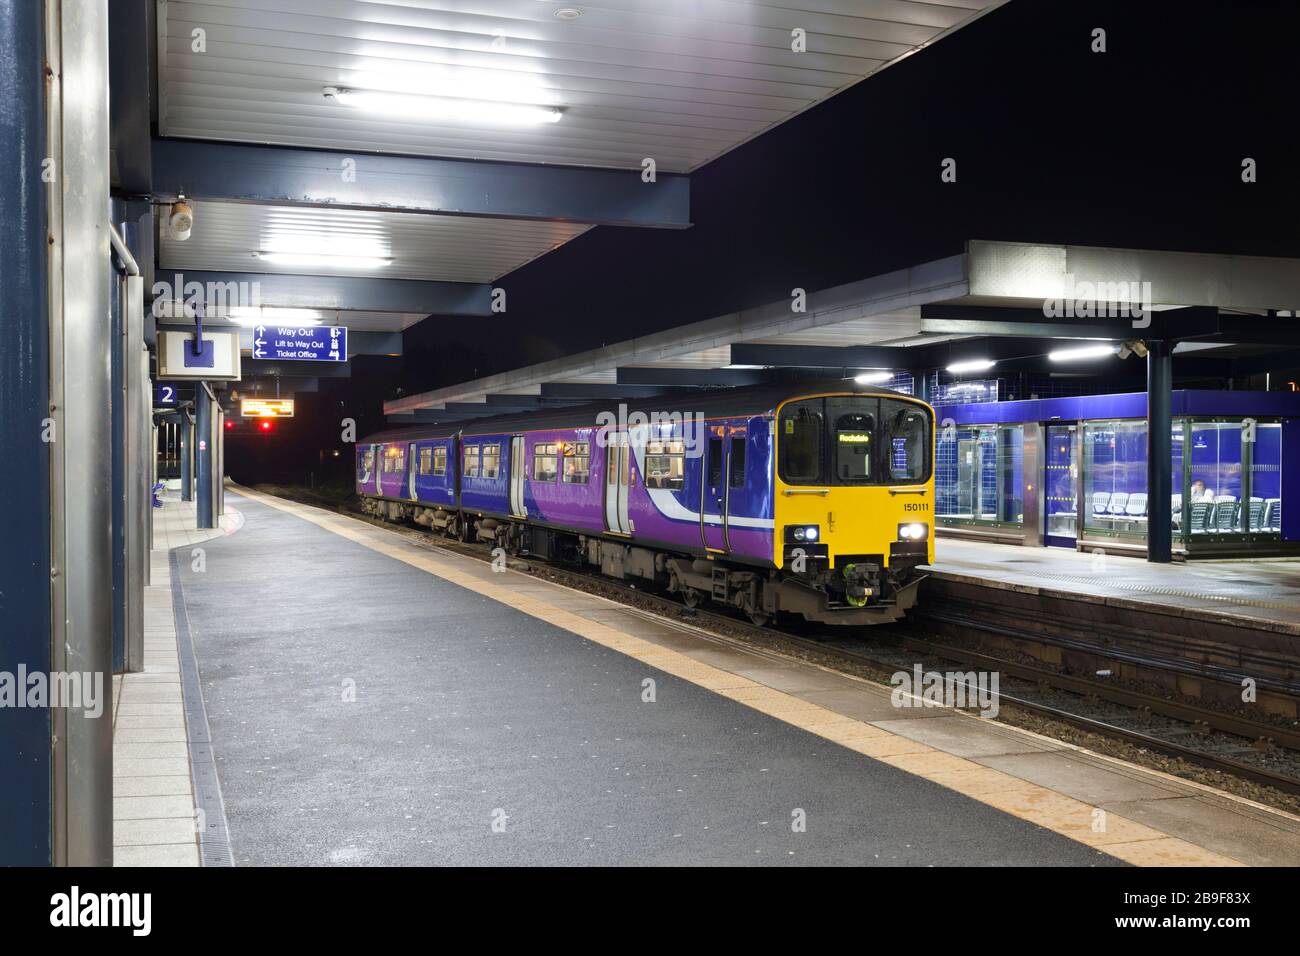 Northern rail class 150 sprinter train 150111 at Blackburn railway station Stock Photo